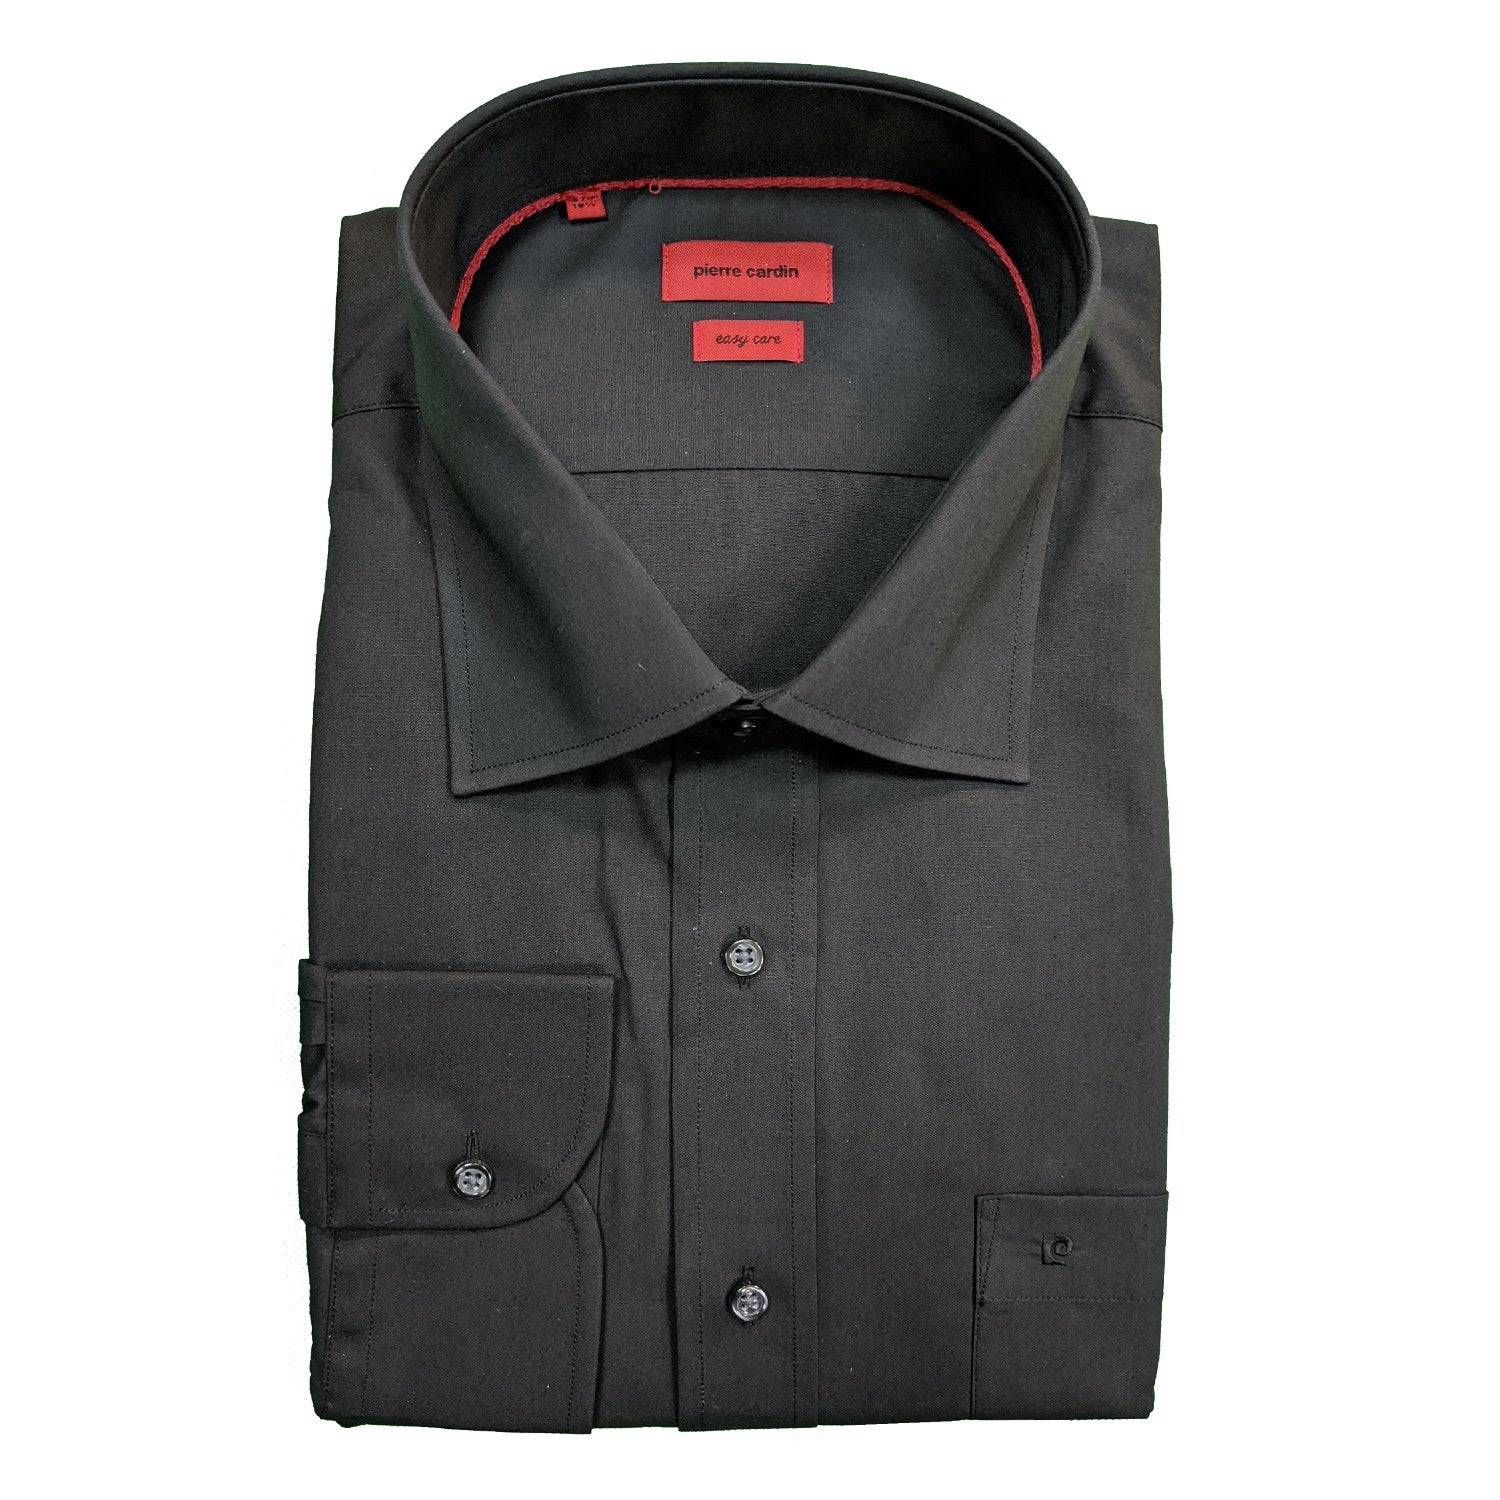 Pierre Cardin L/S Shirt - PC9000 - Black 1